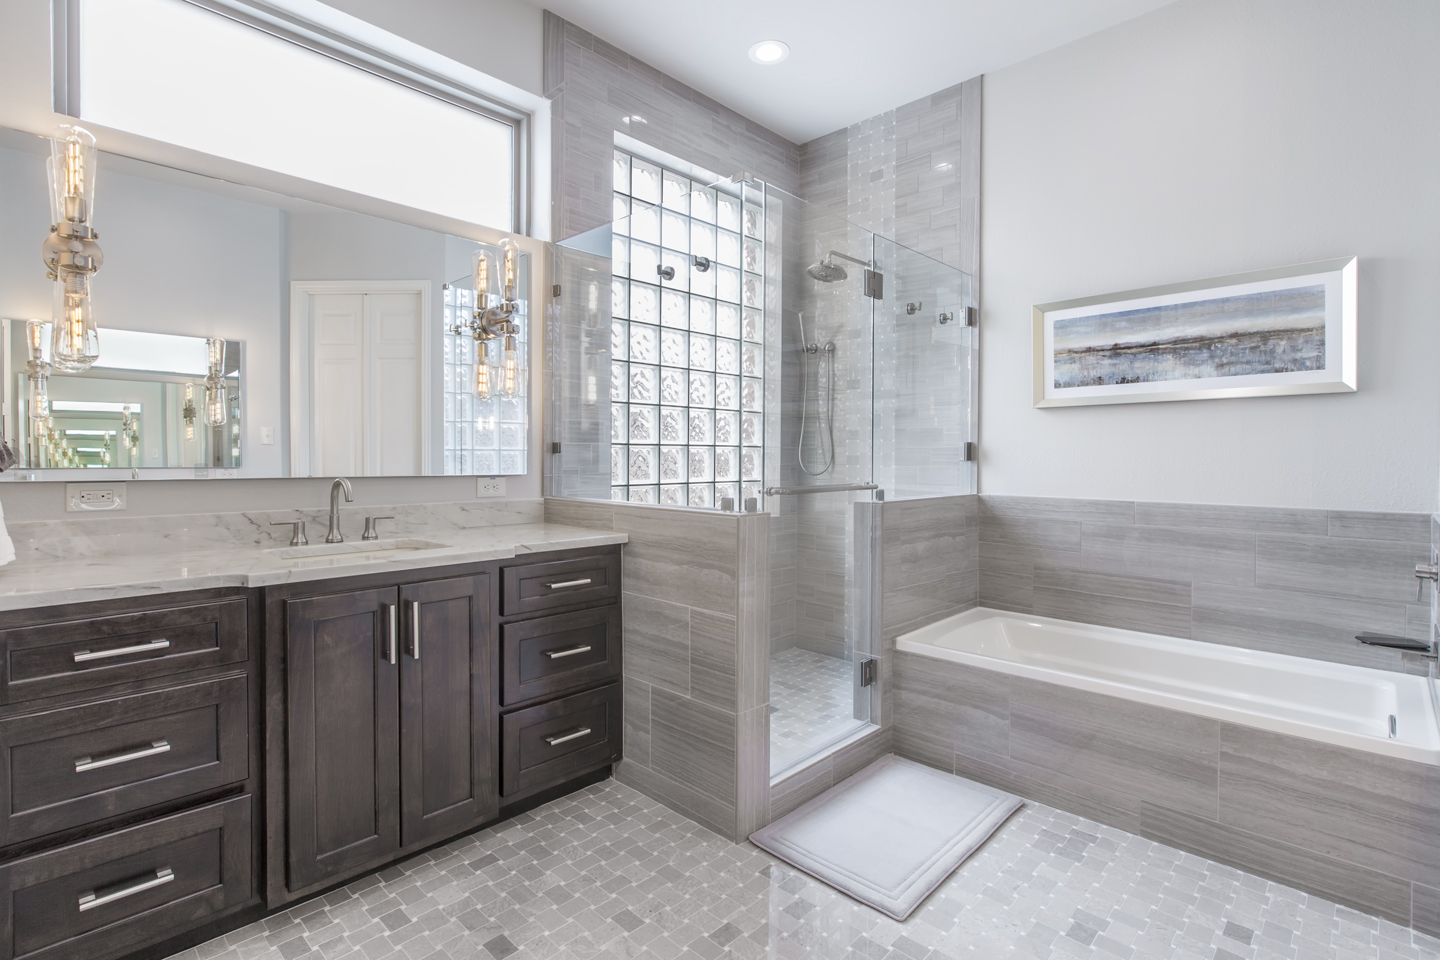 A Builder Grade Master Bathroom Gets A Modern Upgrade Medford Design Build